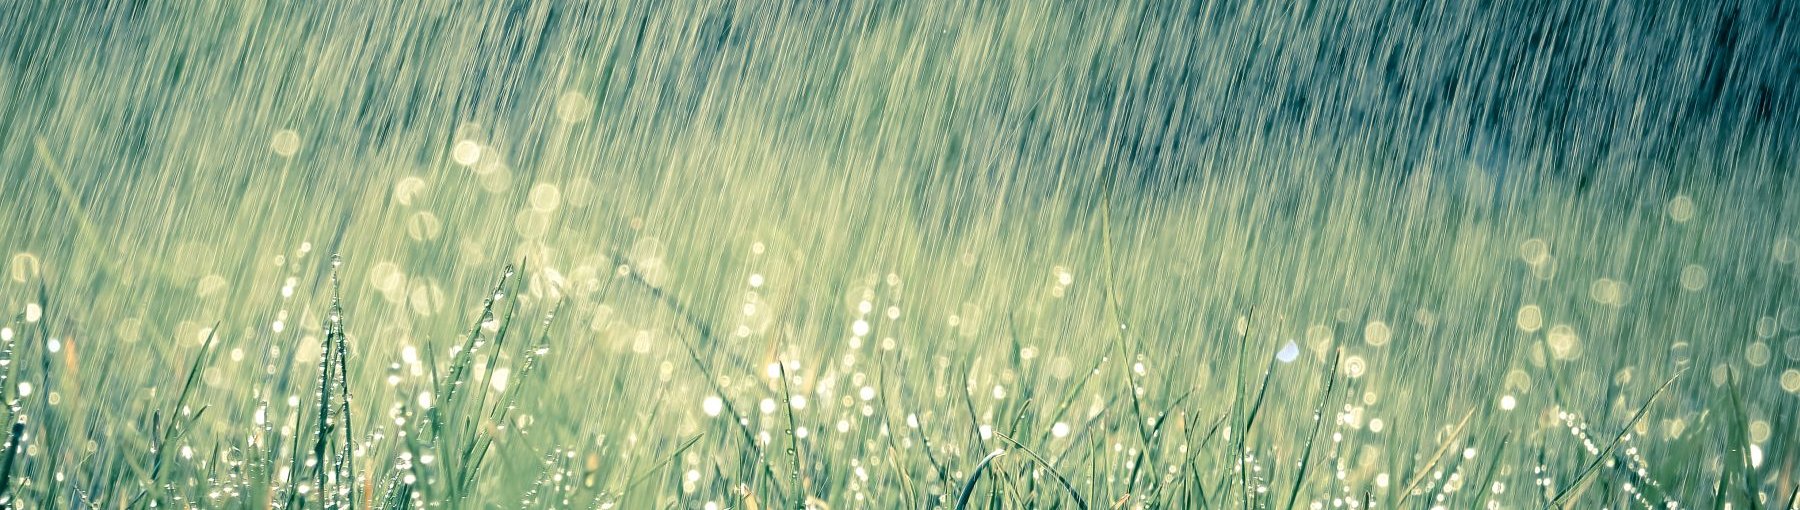 Opady deszczu Fot. Shutterstock